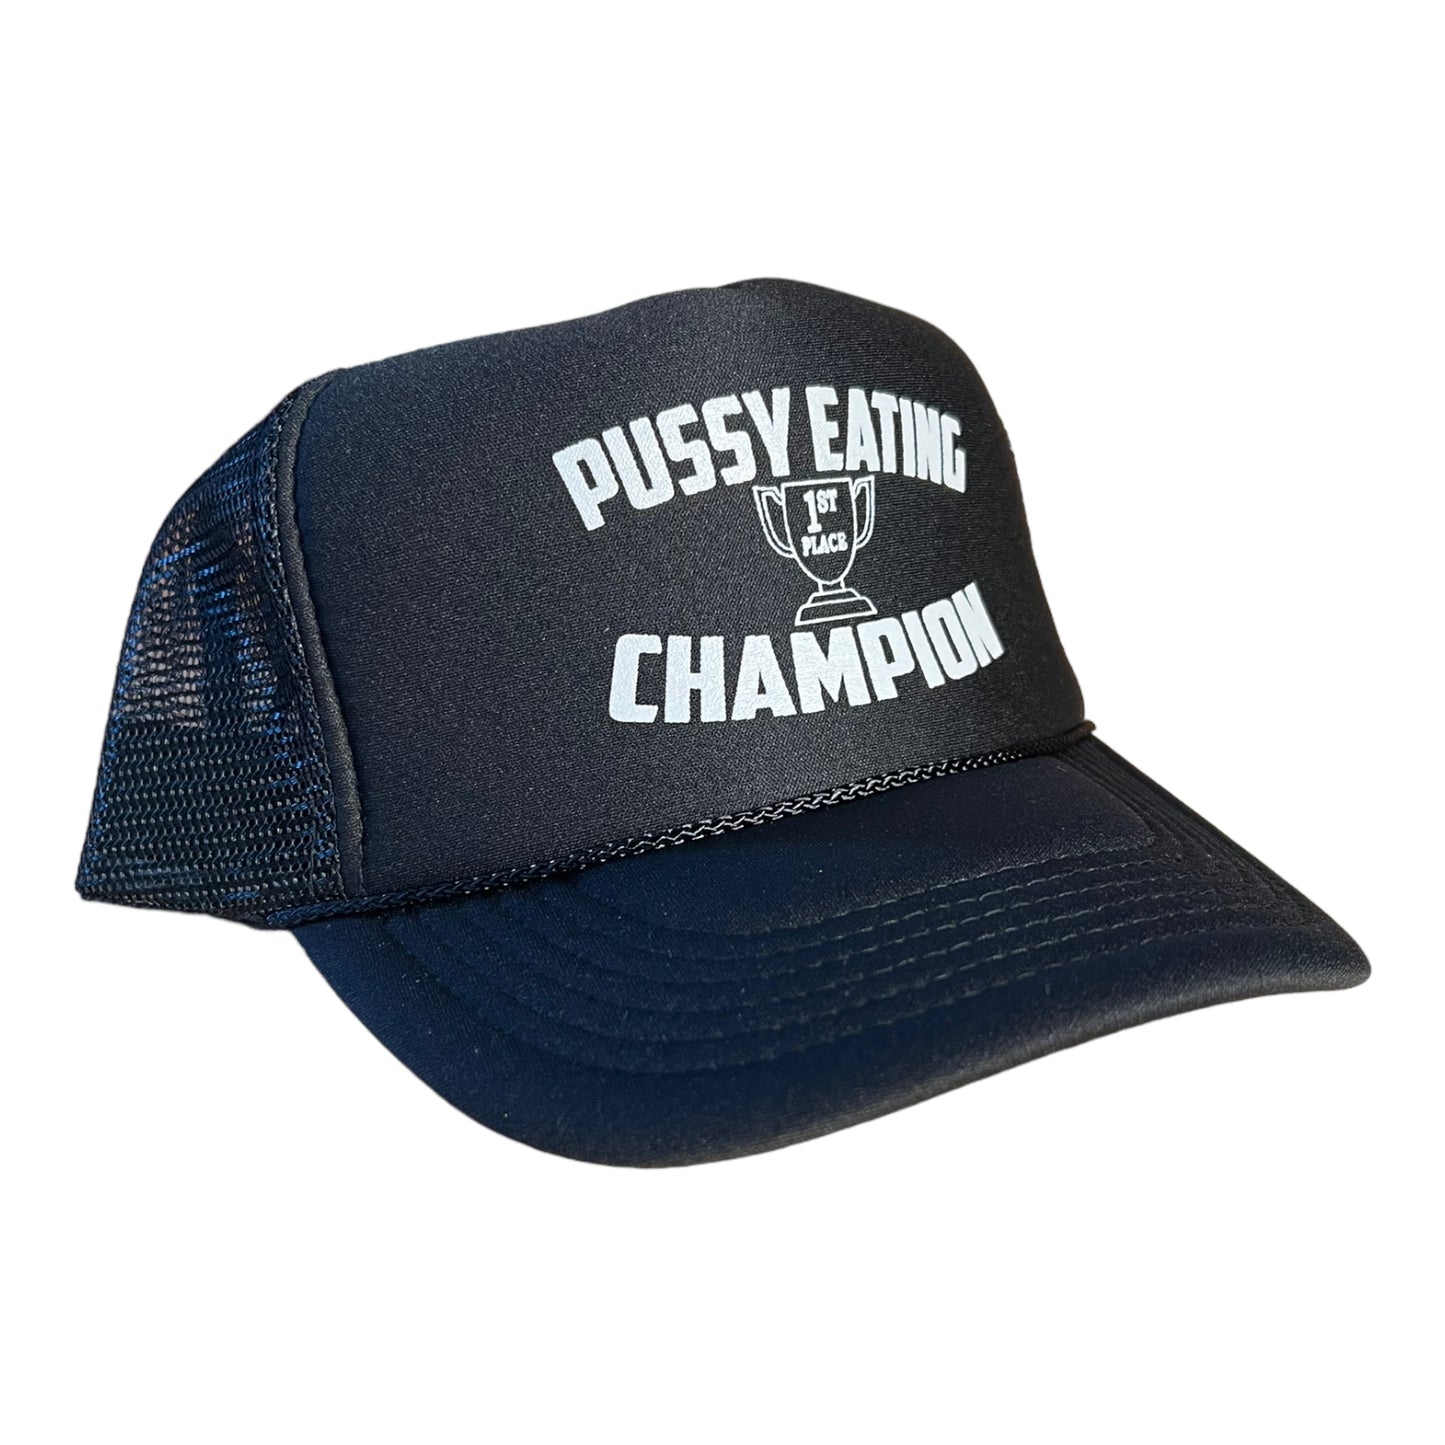 Pussy Eating Champion Trucker Hat Funny Trucker Hat Black